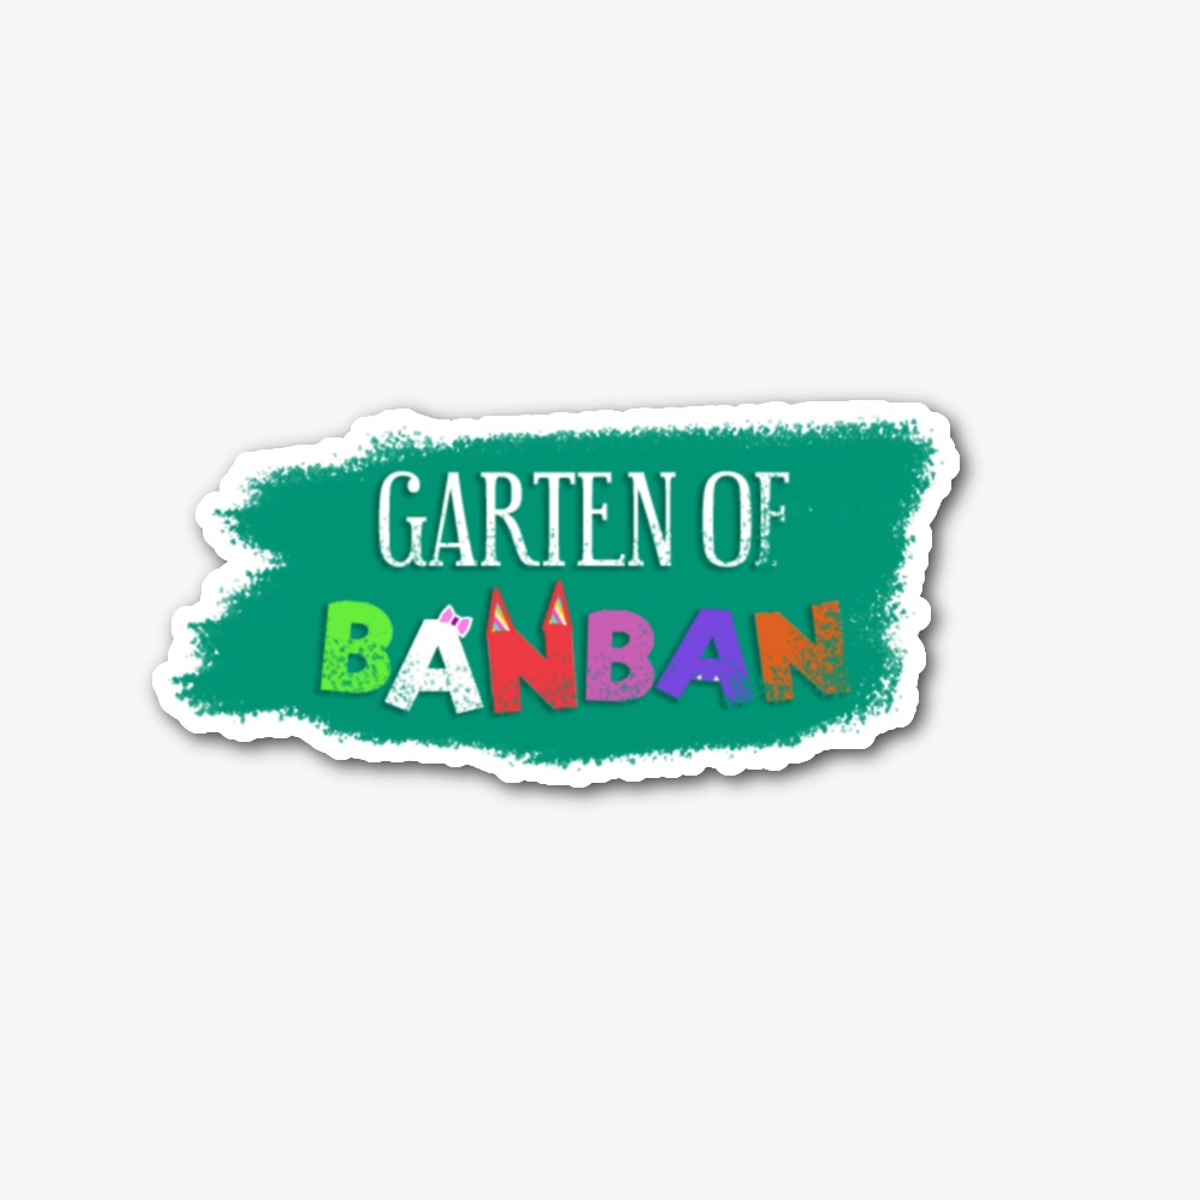 logo de garten of banban